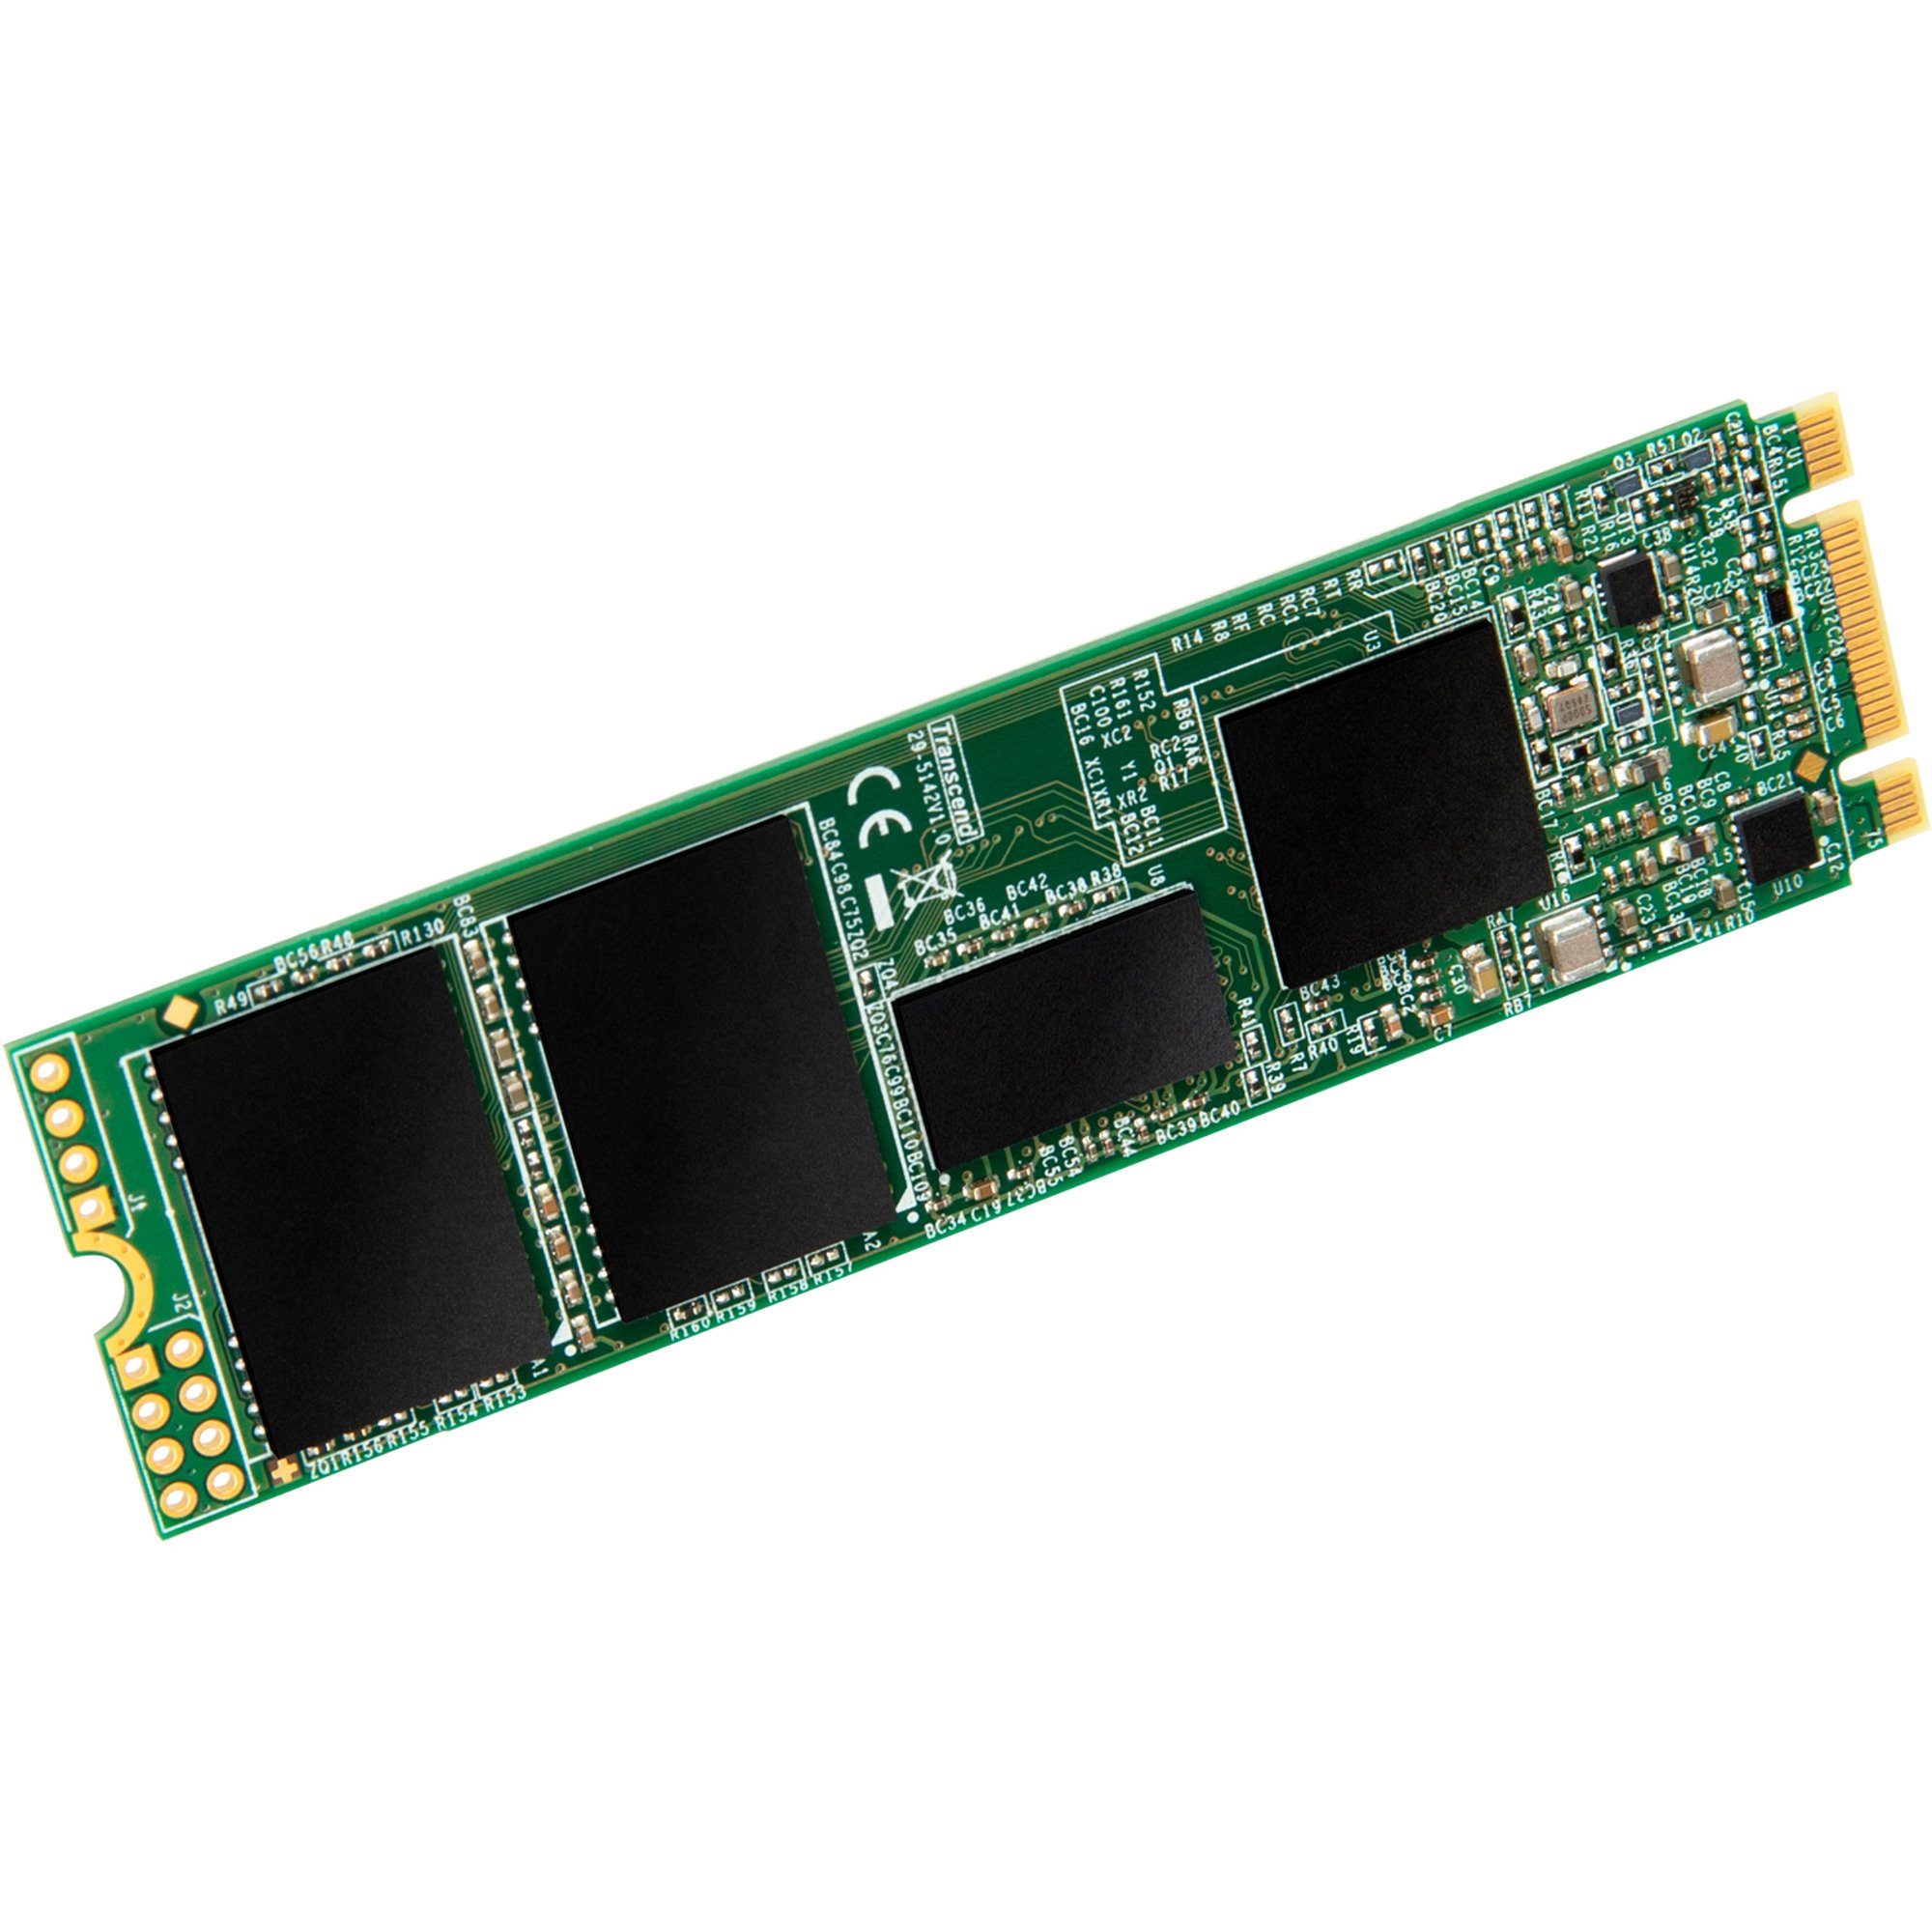 Transcend MTS830S 128 GB SSD-Festplatte (128 GB) Steckkarte"